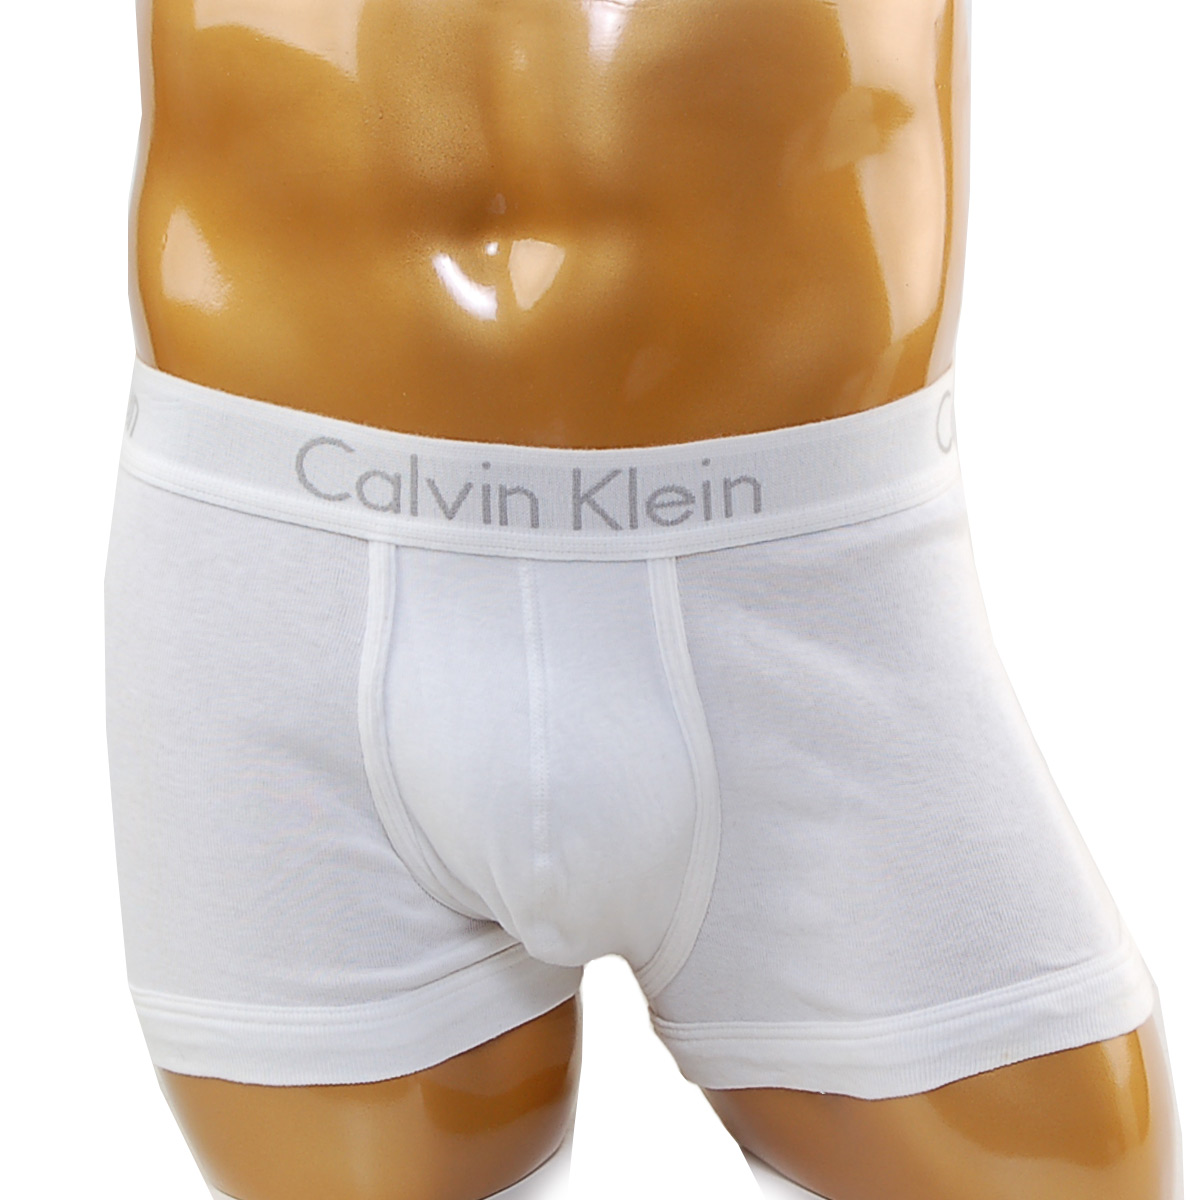 [Calvin Klein] 신상품 Body Low Rise Trunk White (U1704)